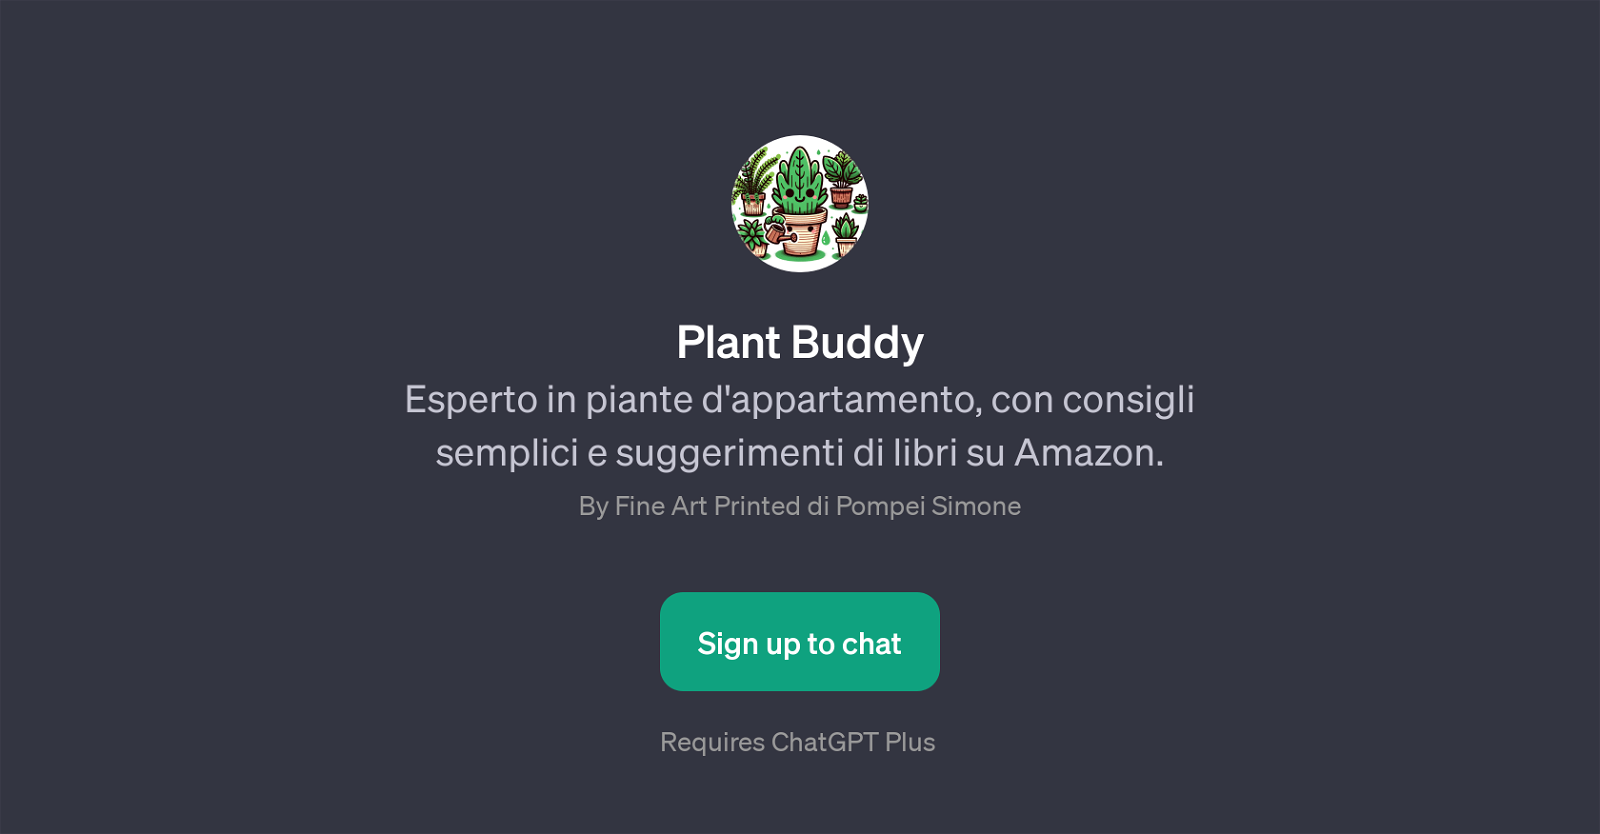 Plant Buddy website